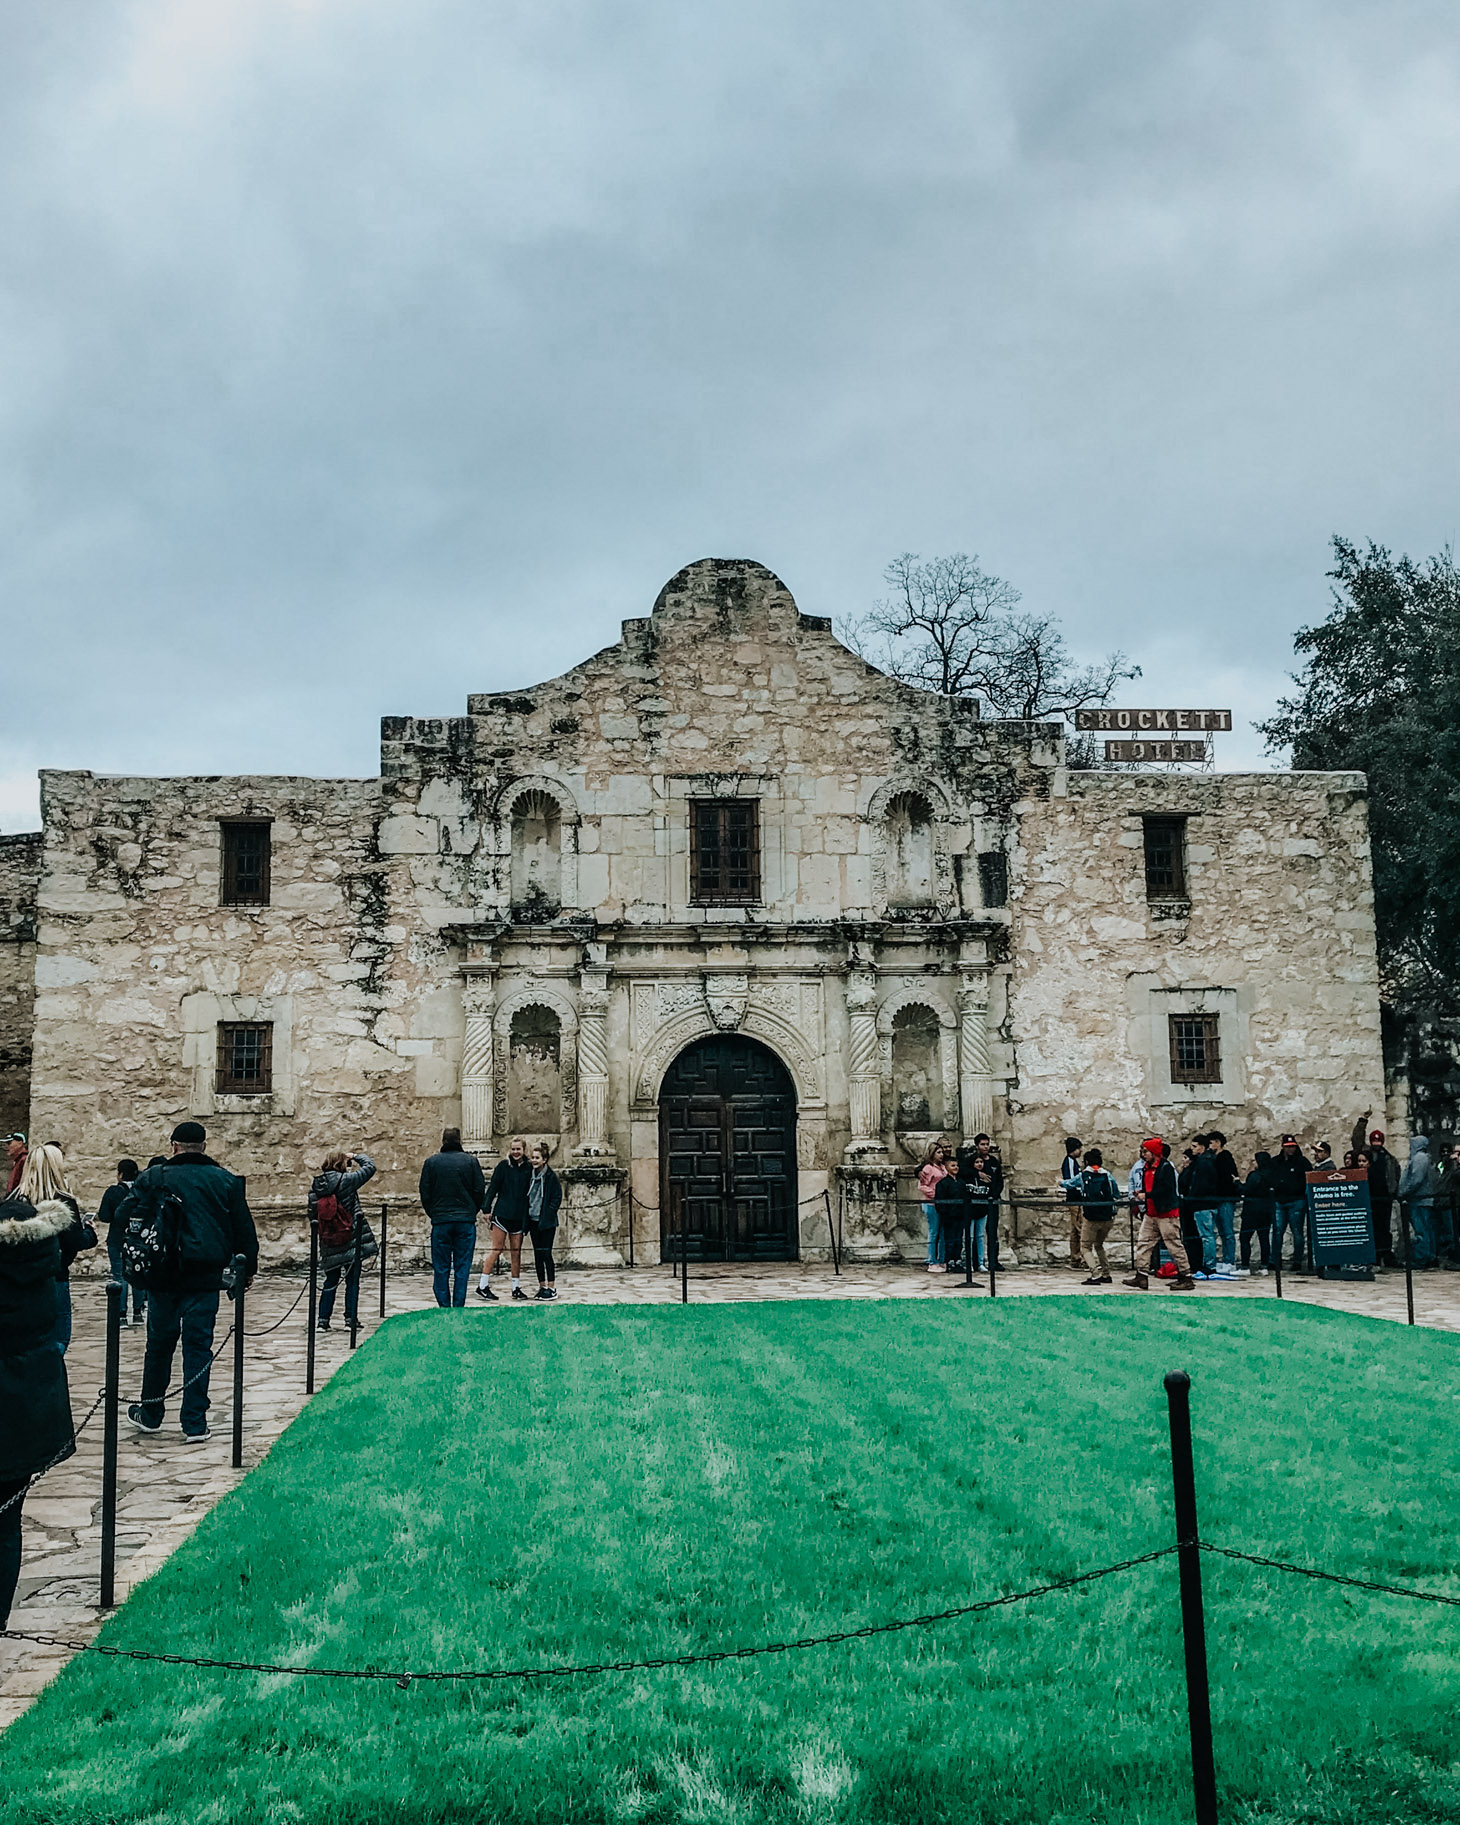 Top 10 Kid Friendly Activities in San Antonio by popular Texas travel blog, Lone Star Looking Glass: image of the Alamo in San Antonio, Texas.